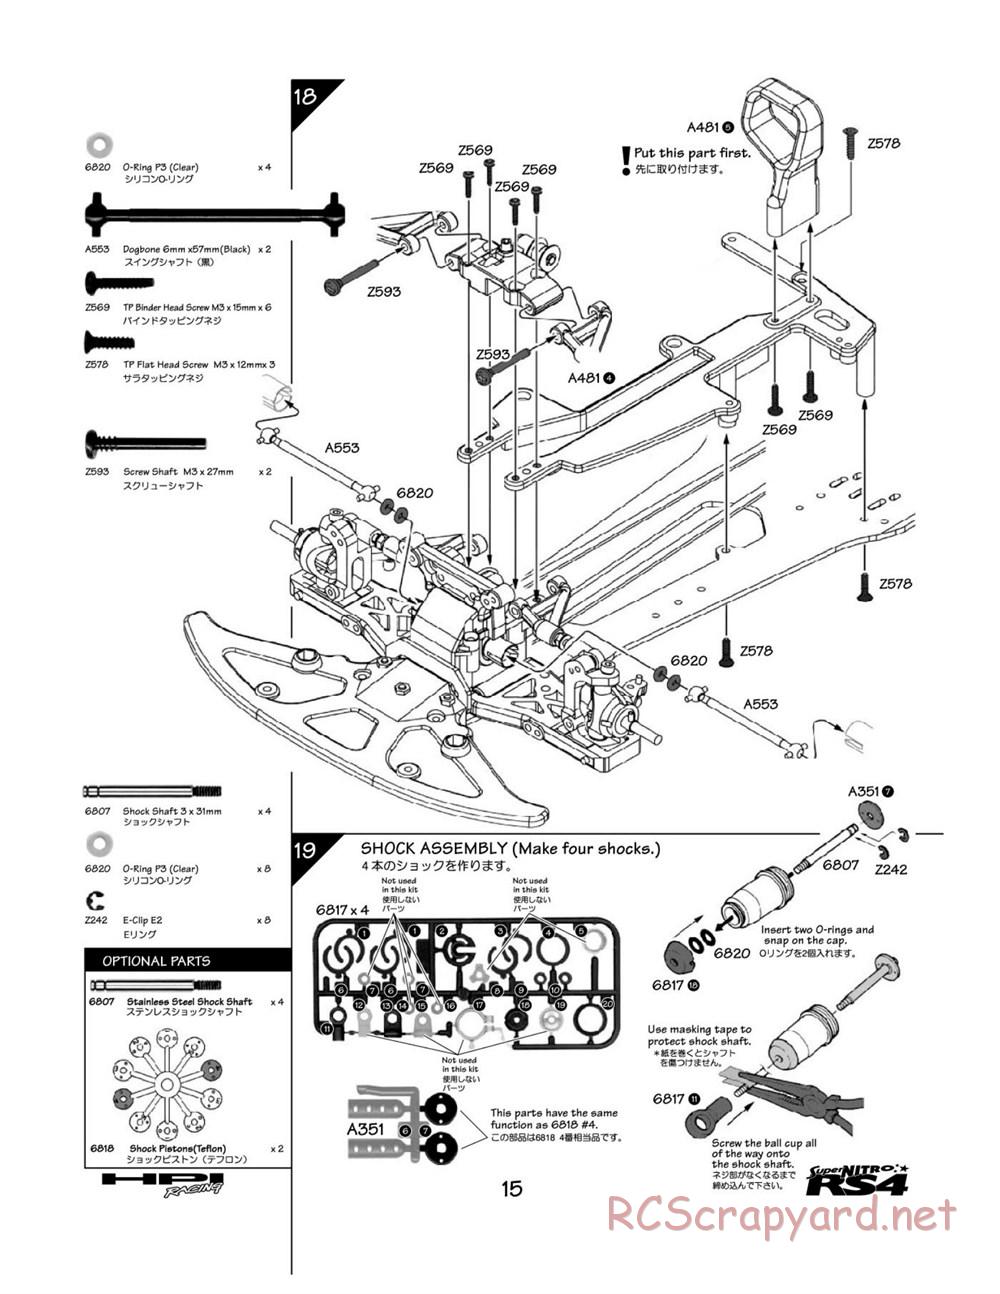 HPI - Super Nitro RS4 - Manual - Page 15